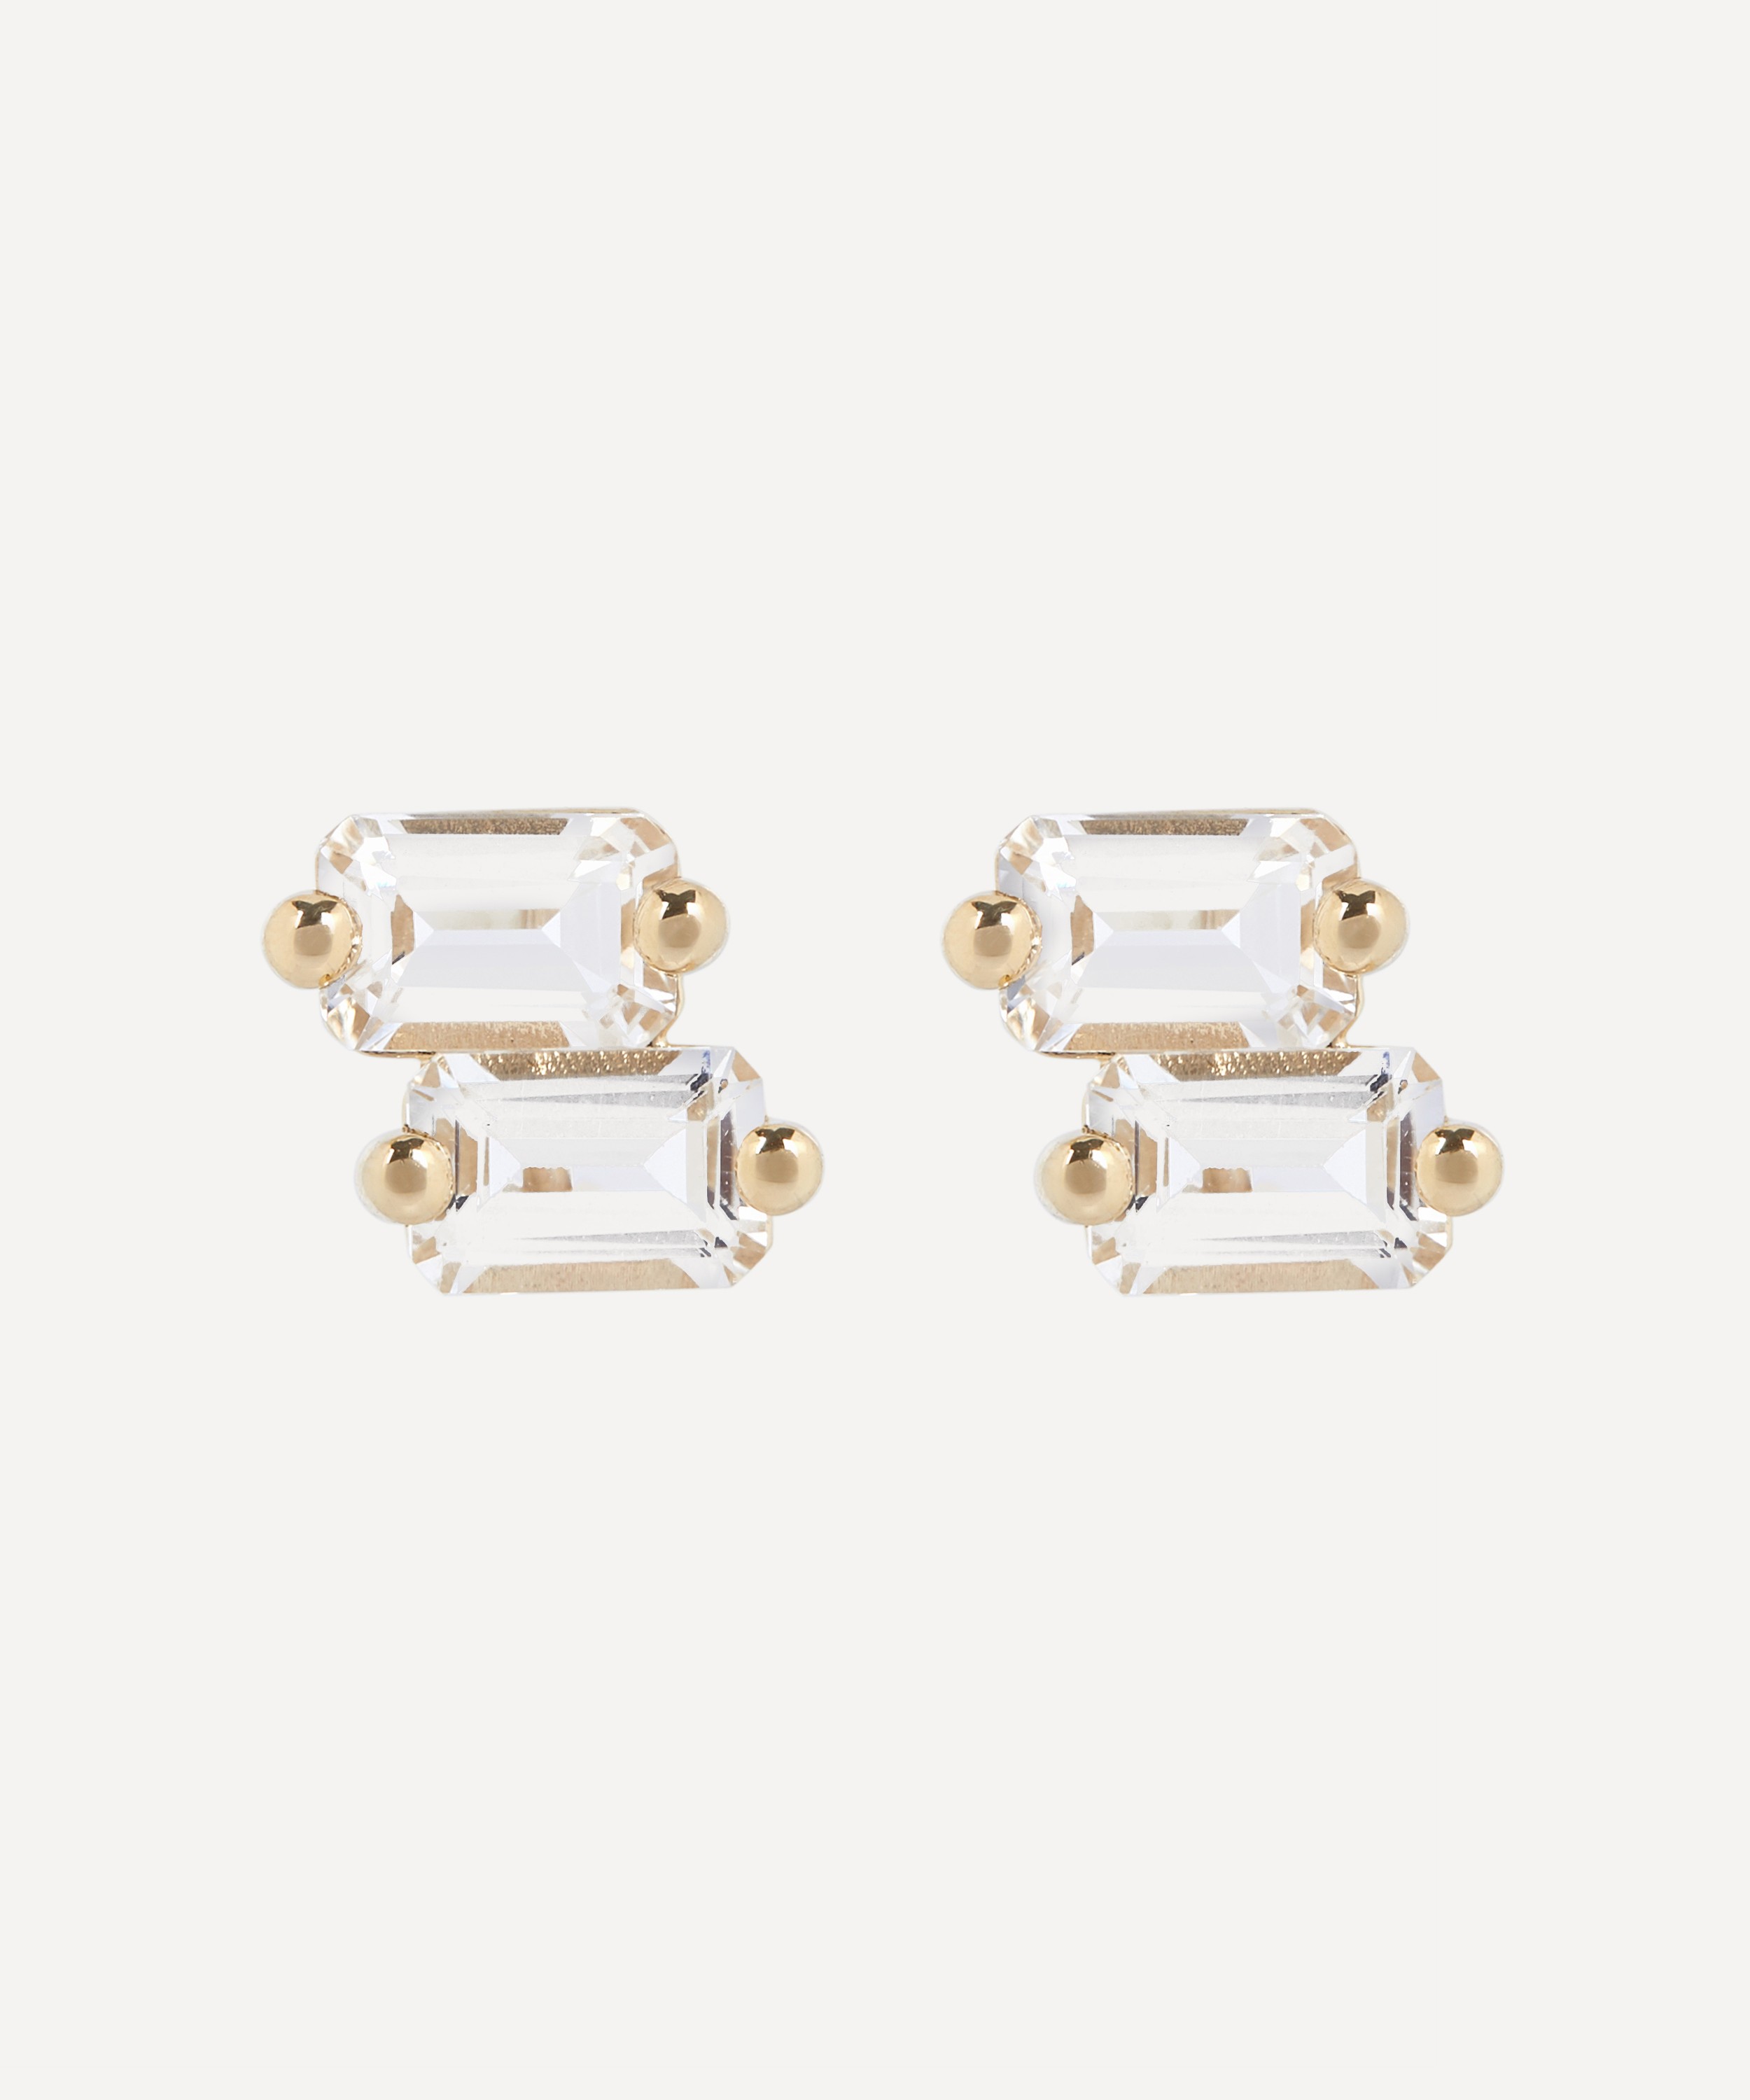 Suzanne Kalan - 14ct Gold Emerald Cut White Topaz Stud Earrings